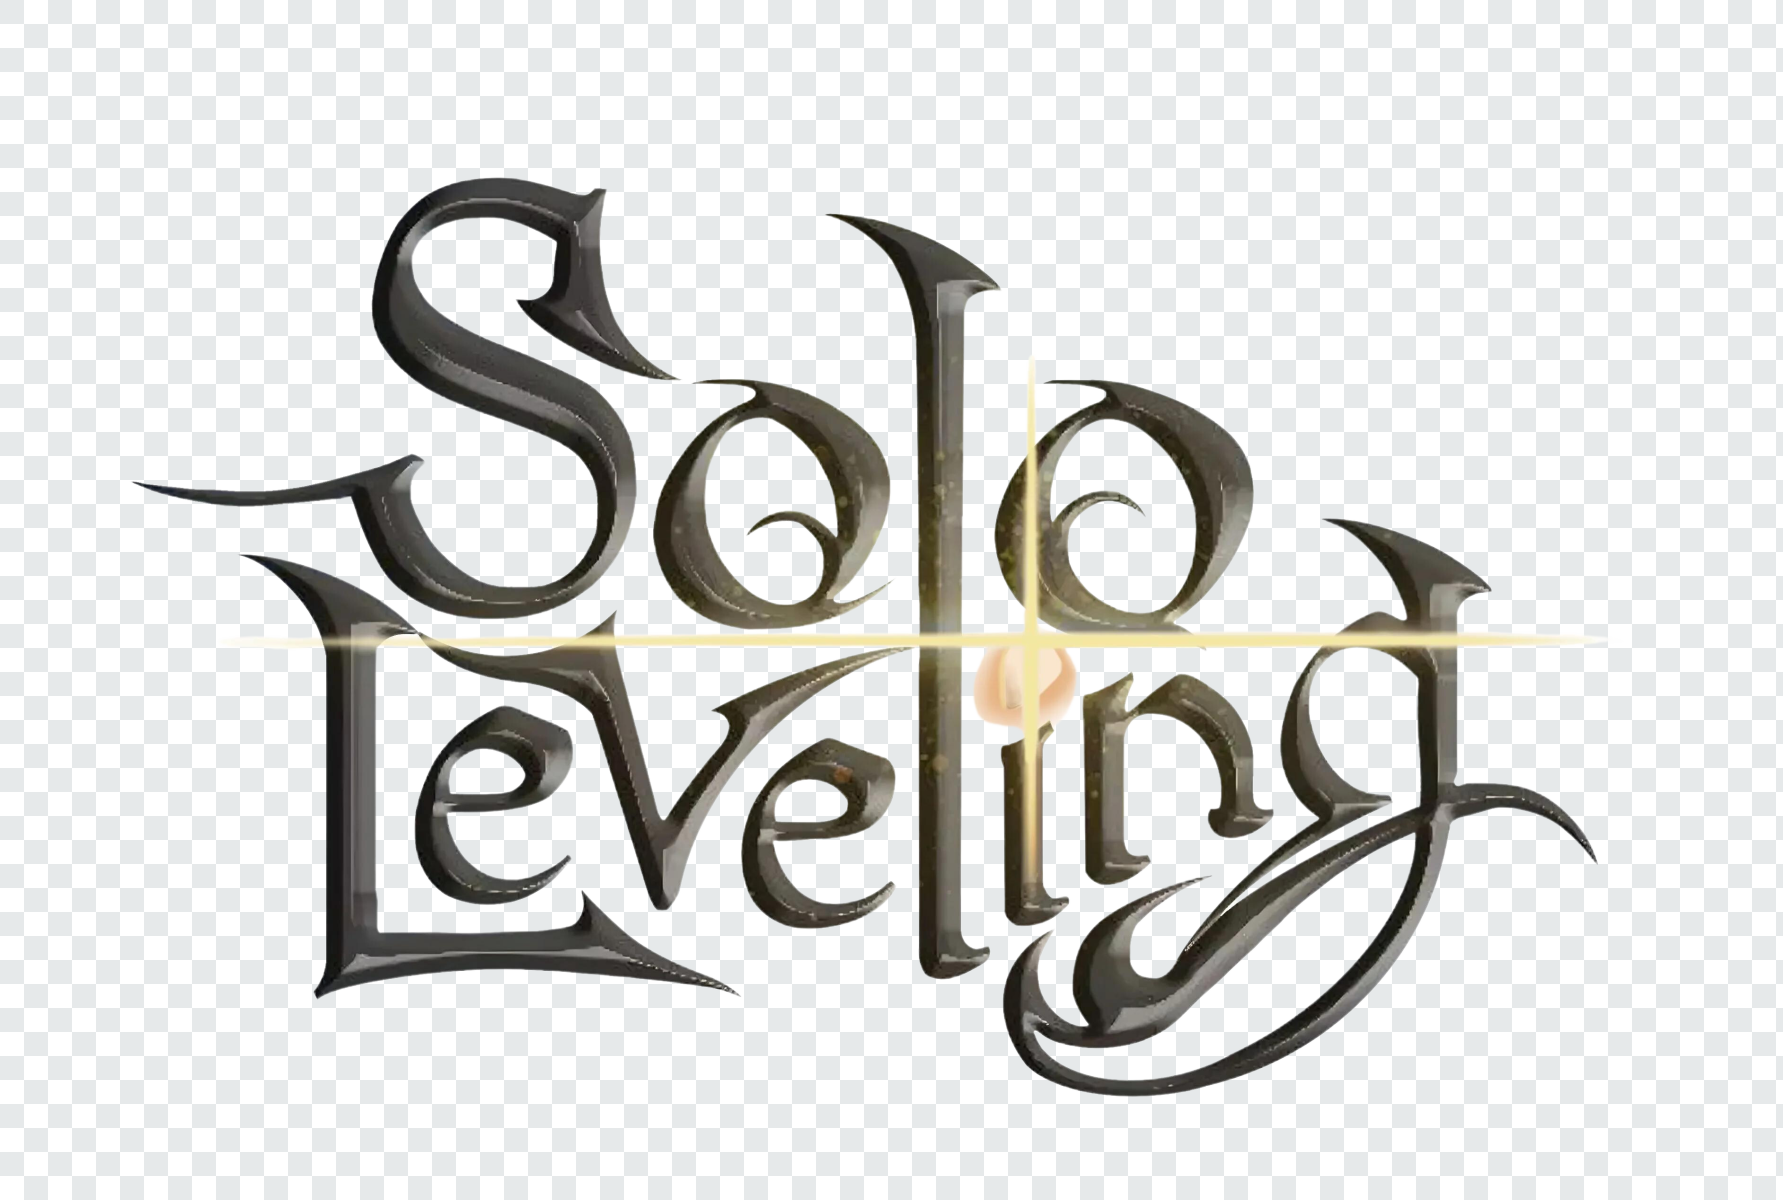 Solo Leveling Logo Transparent PNG